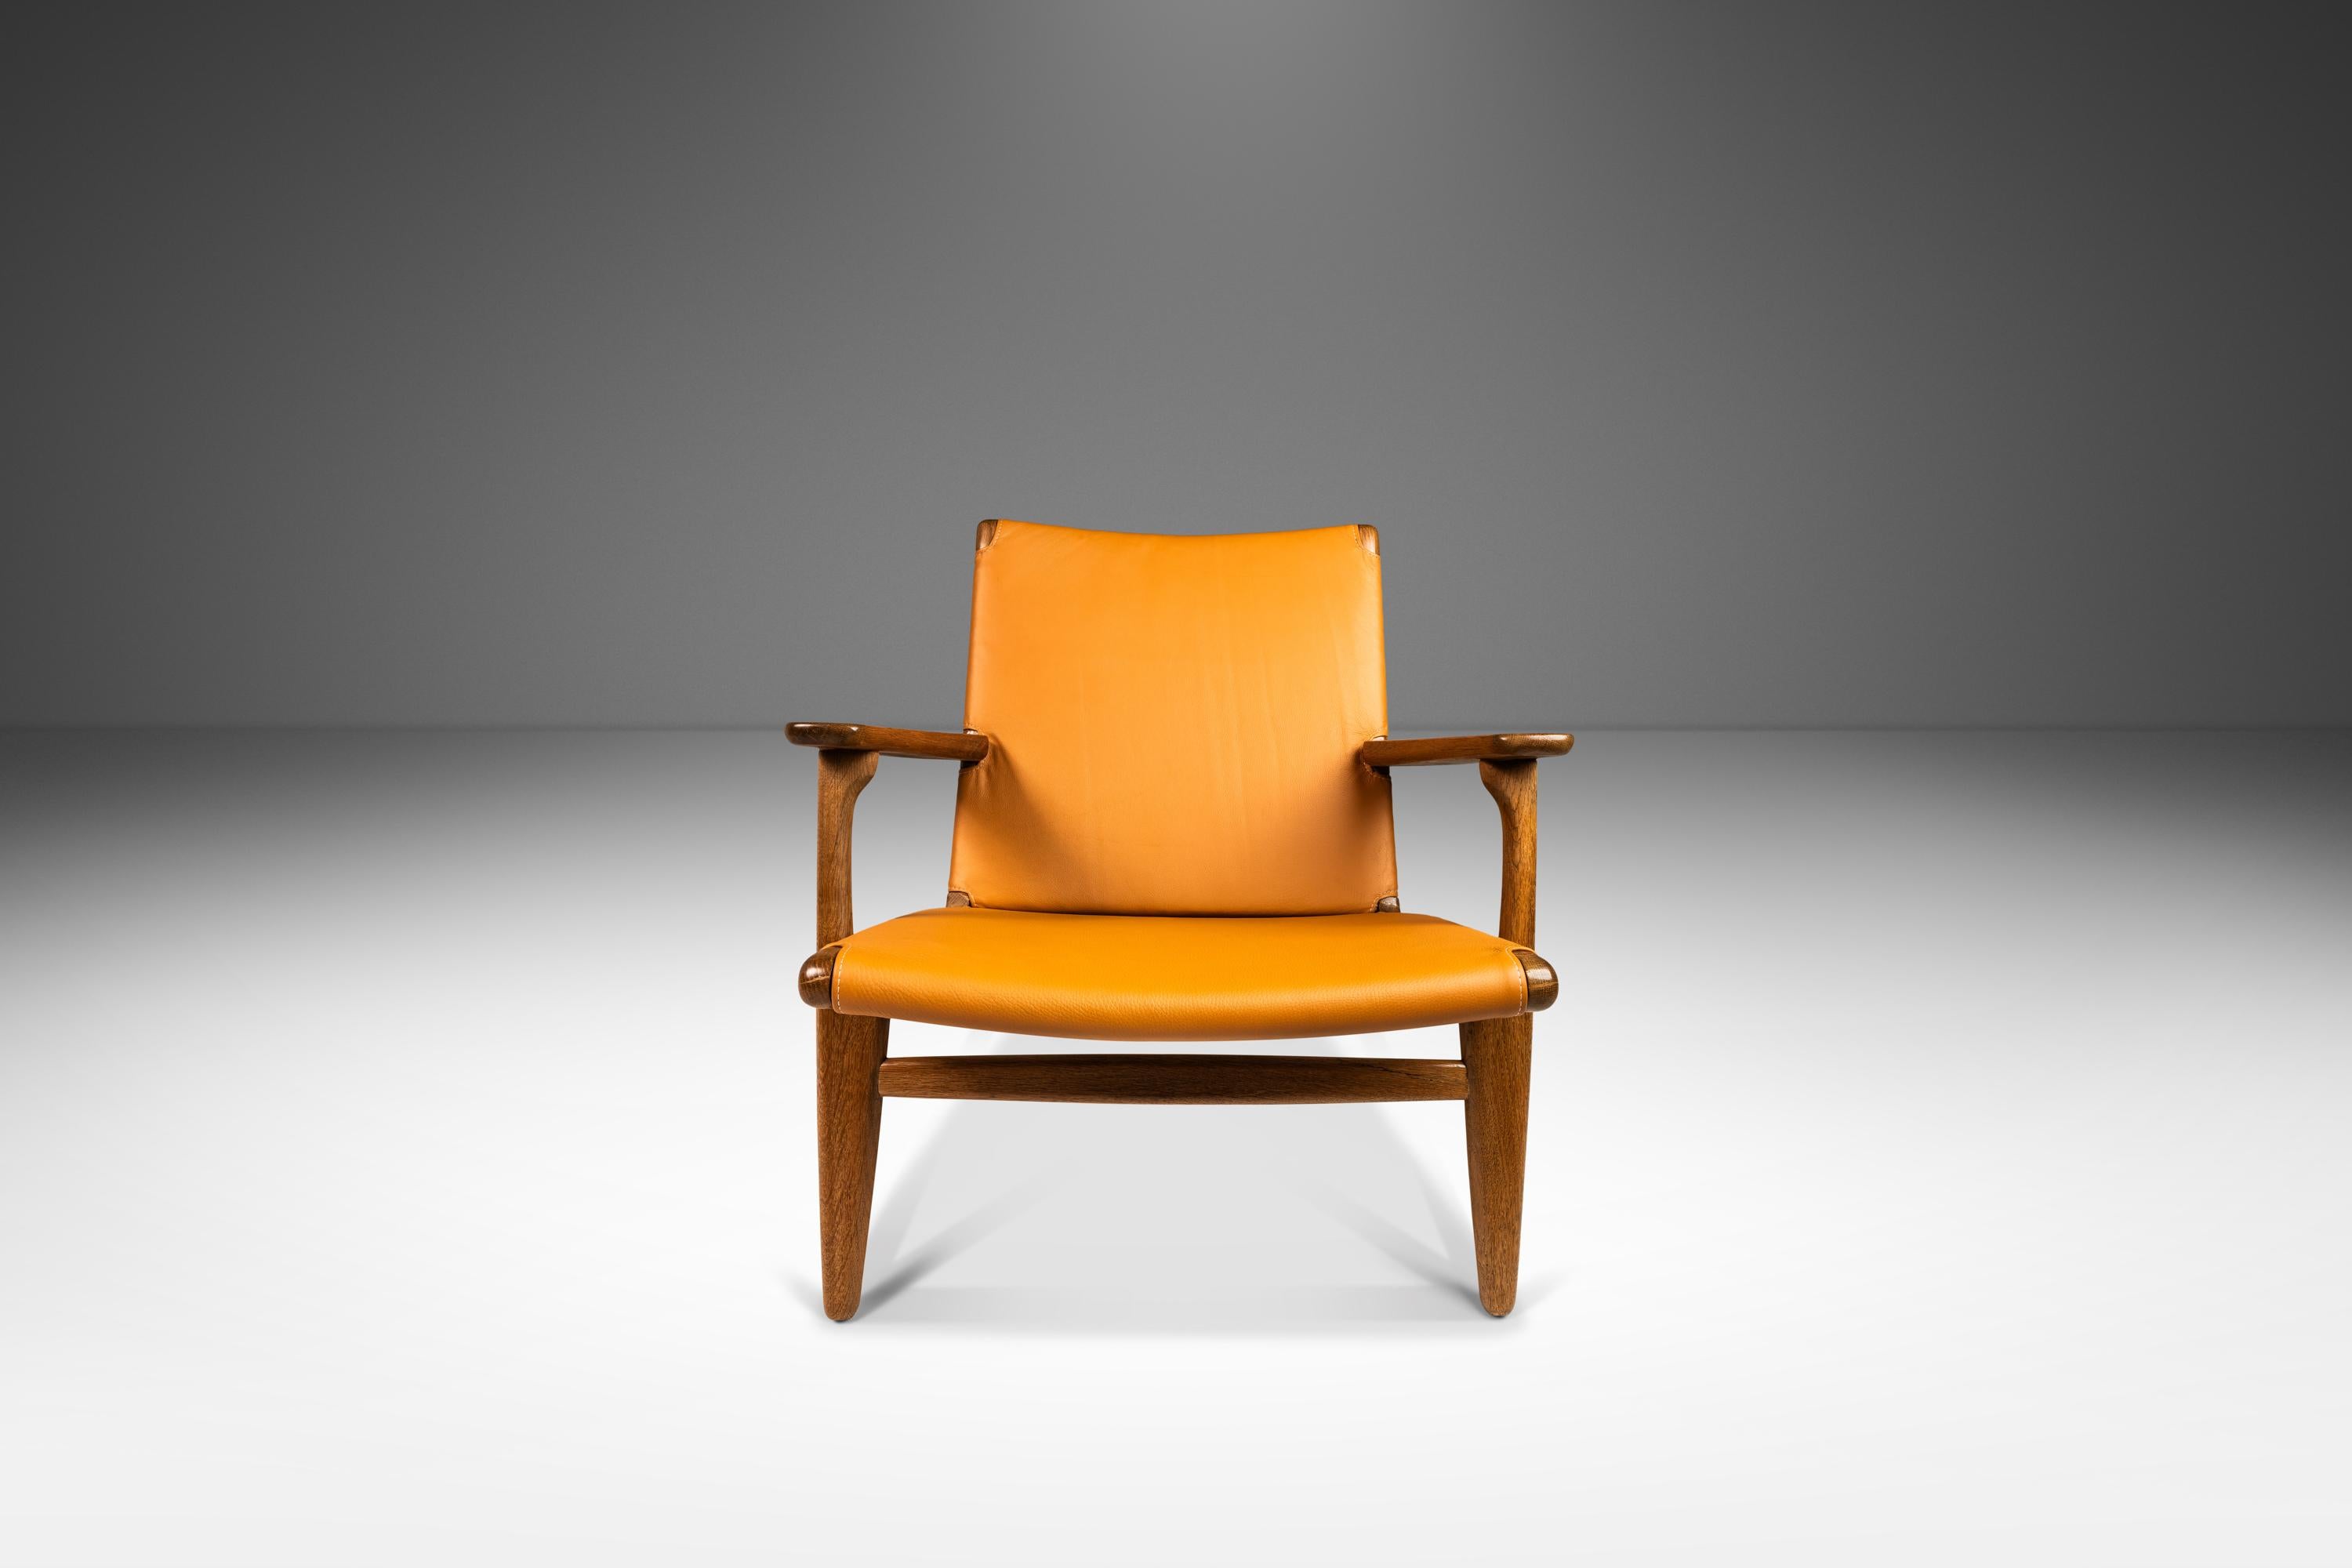  Danish Mid-Century CH 25 Lounge Chair by Hans J. Wegner, Oak & Leather, c. 1950 For Sale 8